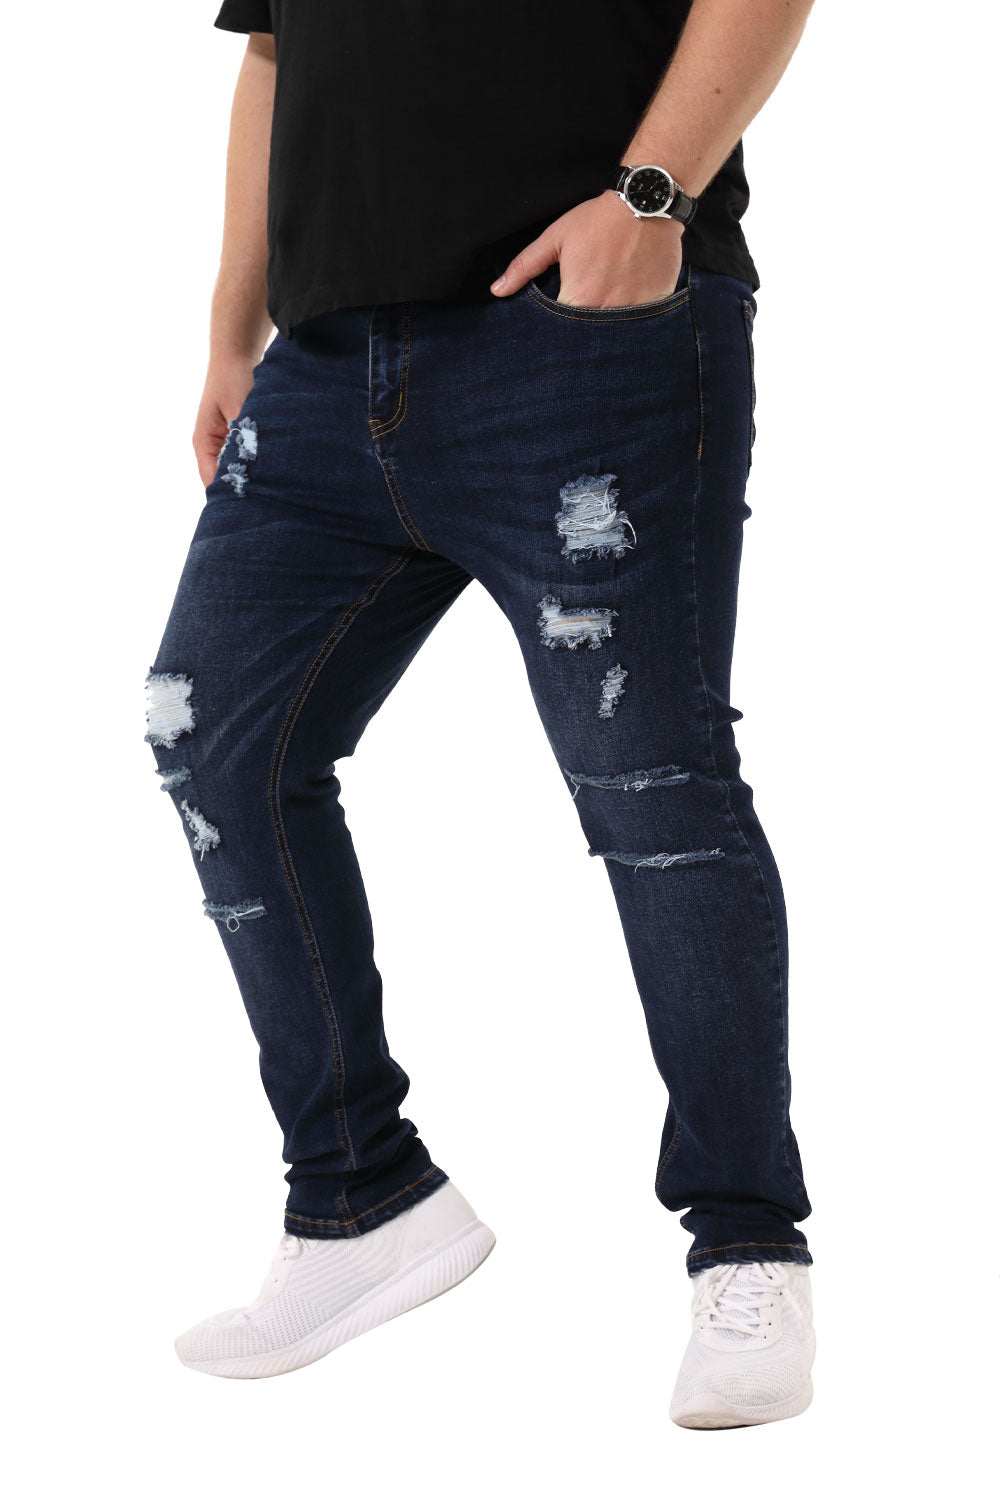 Blue stretch jeans(B&T)